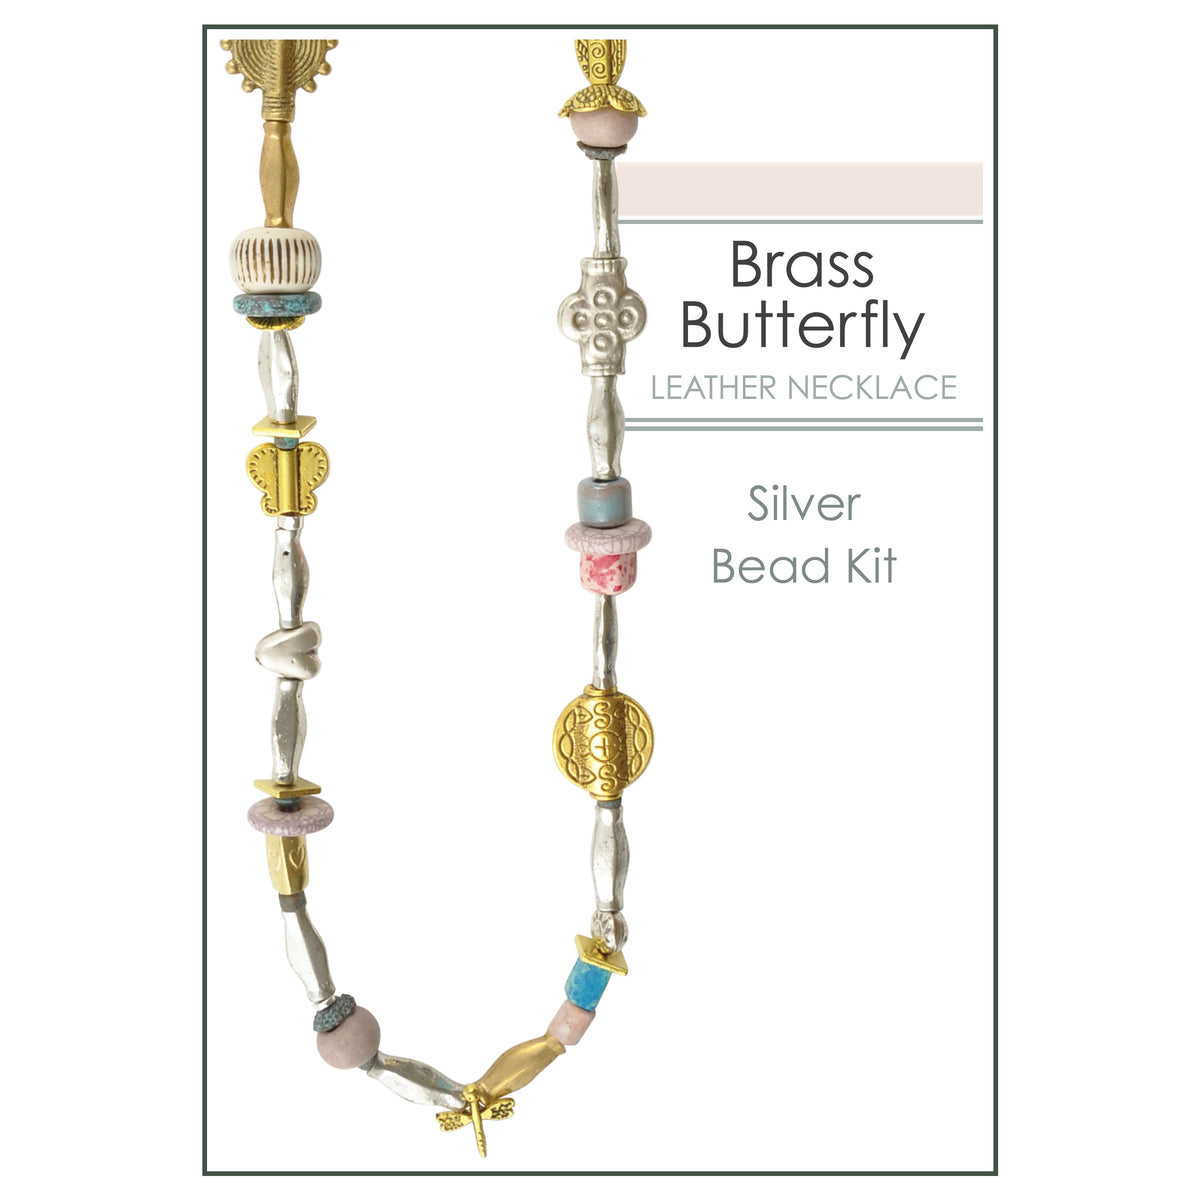 Beading Books-Creative Bead Weaving-Carol Wilcox Wells - Tamara Scott  Designs